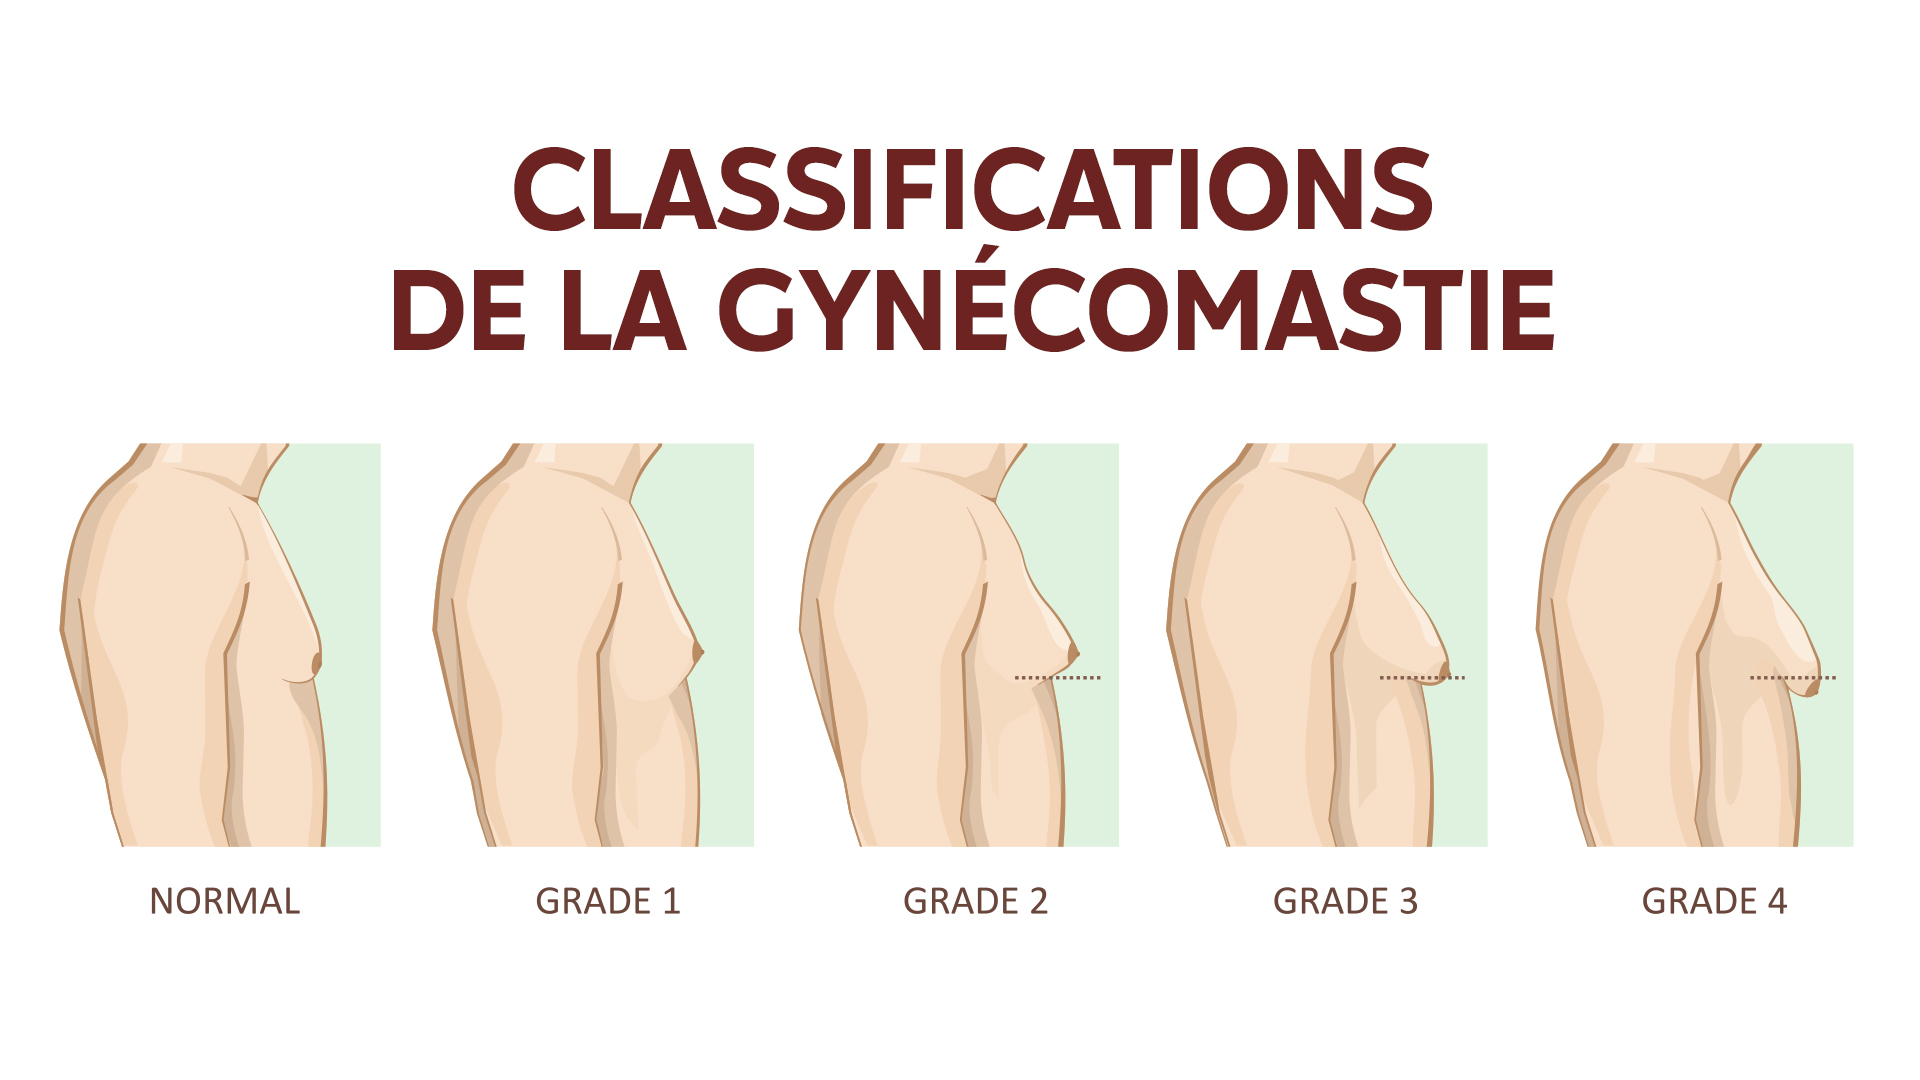 Classification des des gynécomastie